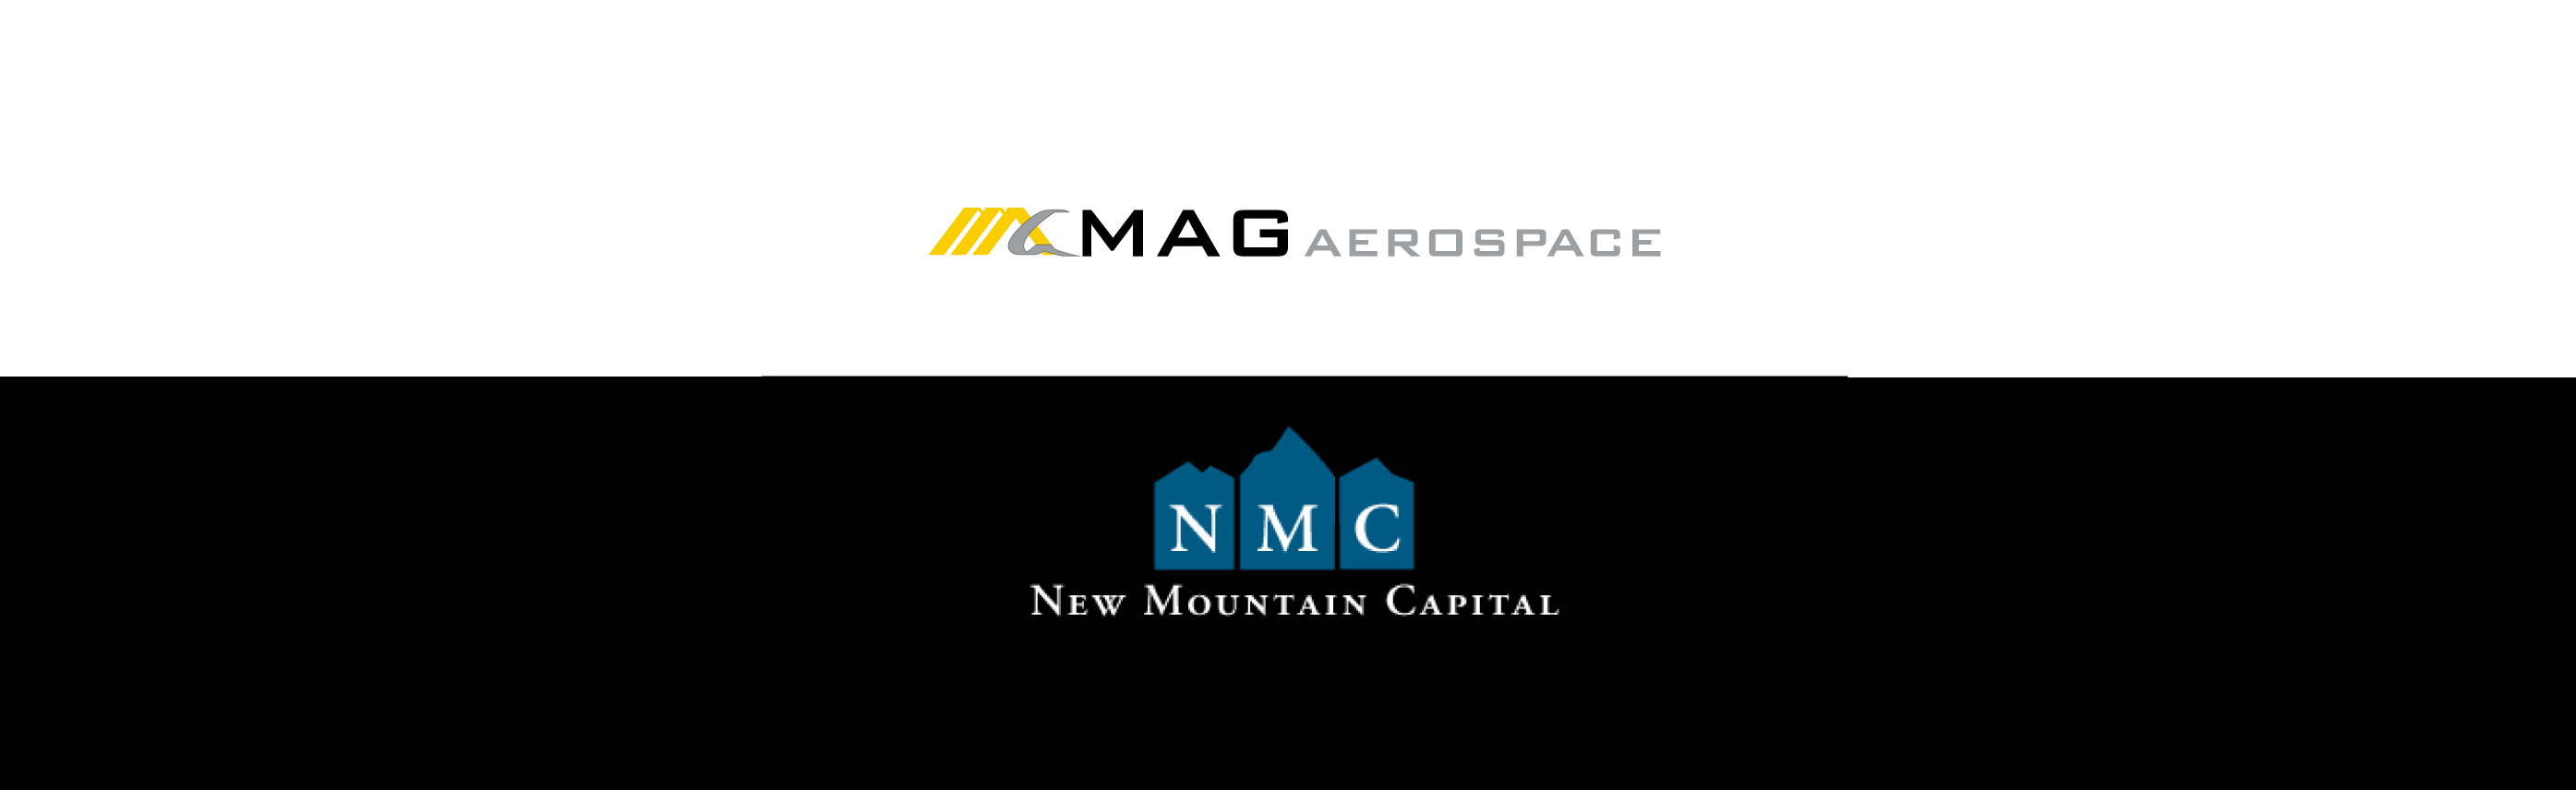 MAG Aerospace and New Mountain Capital Logos